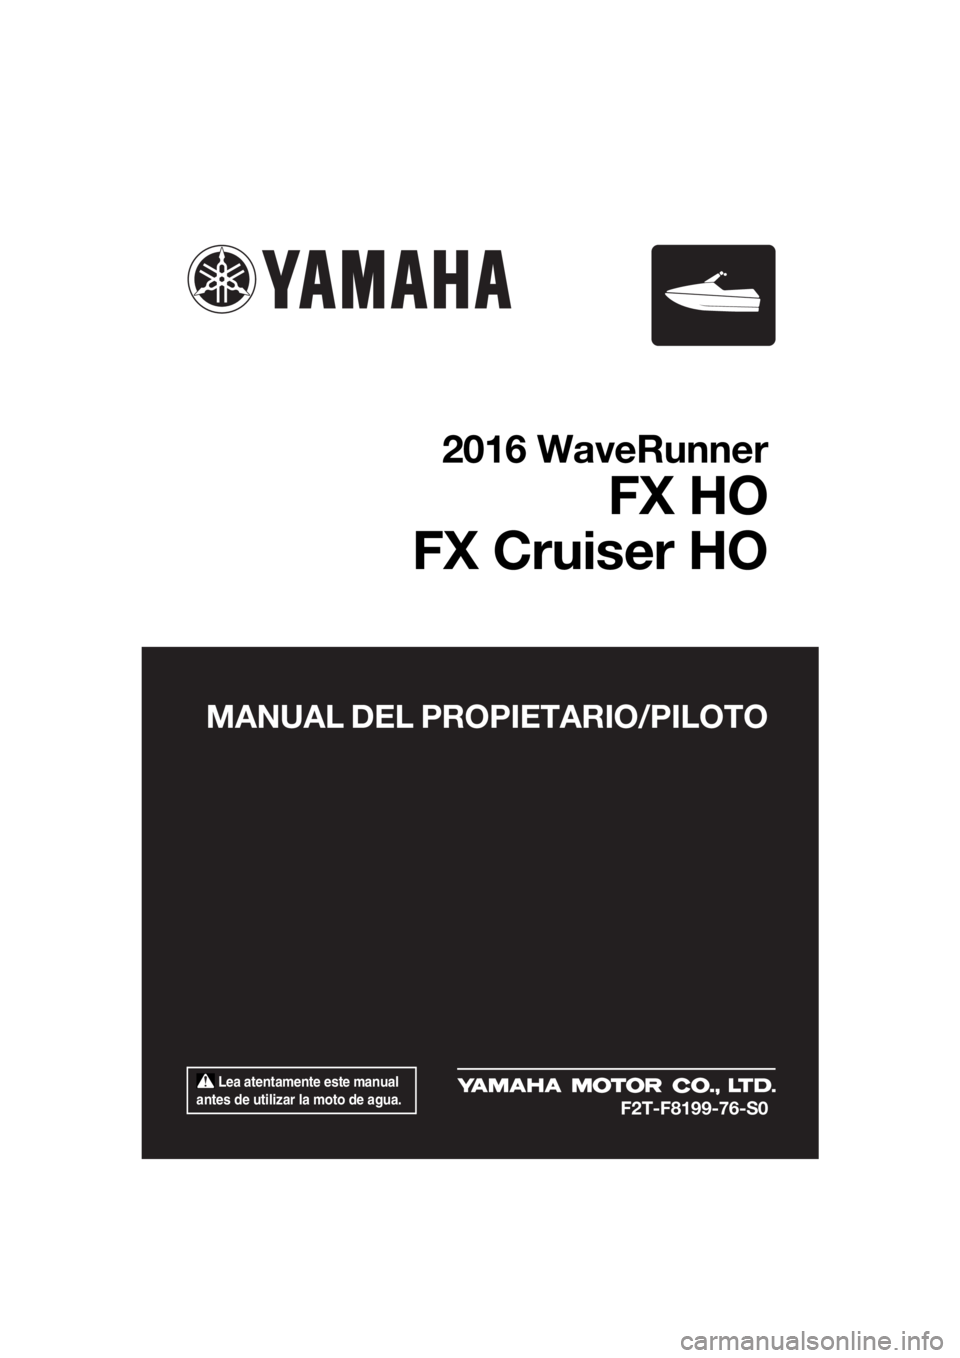 YAMAHA FX HO CRUISER 2016  Manuale de Empleo (in Spanish)  Lea atentamente este manual 
antes de utilizar la moto de agua.
MANUAL DEL PROPIETARIO/PILOTO
2016 WaveRunner
FX HO
FX Cruiser HO
F2T-F8199-76-S0
UF2T76S0.book  Page 1  Thursday, September 17, 2015  